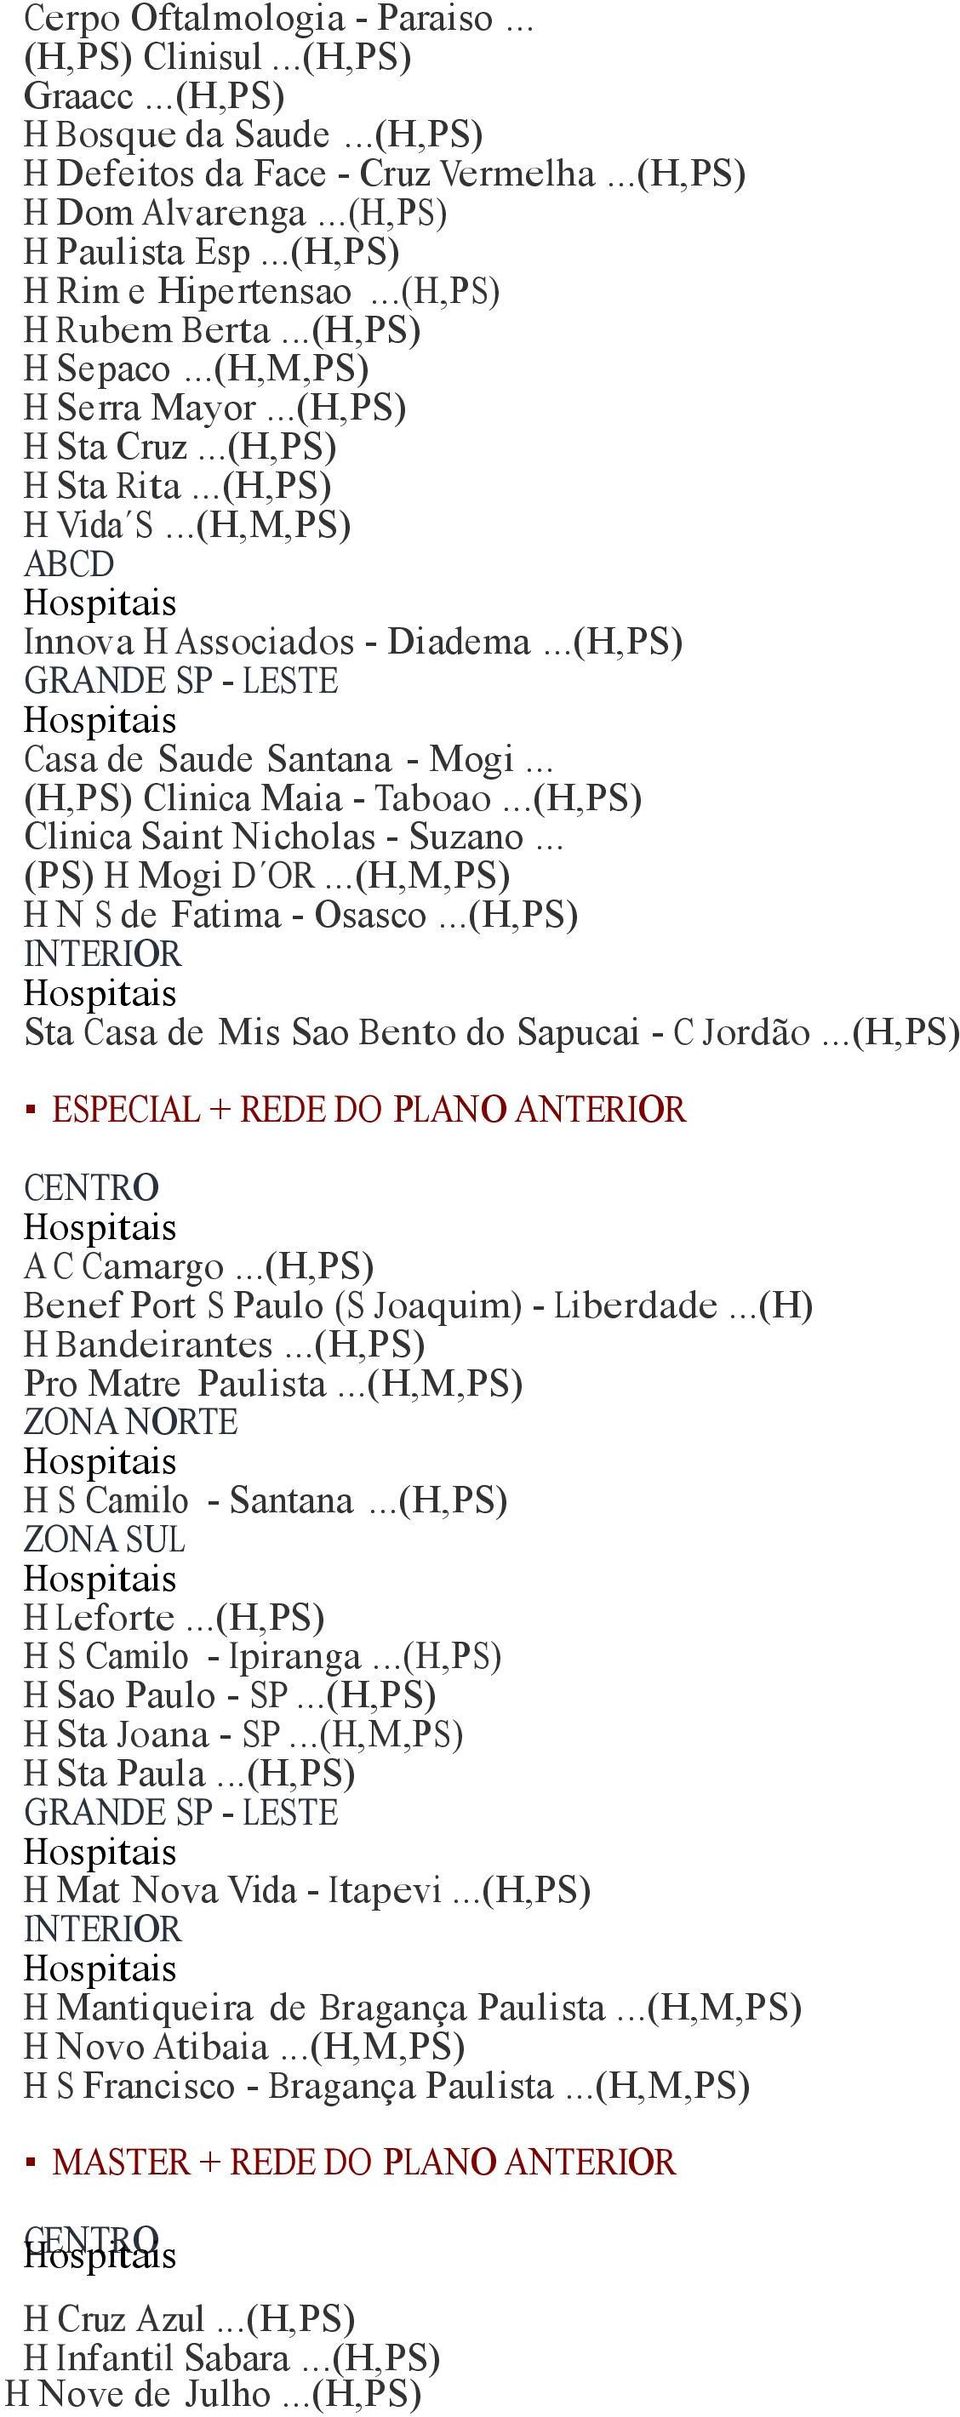 ..(H,PS) GRANDE SP - LESTE Casa de Saude Santana - Mogi... (H,PS) Clinica Maia - Taboao...(H,PS) Clinica Saint Nicholas - Suzano... (PS) H Mogi D OR...(H,M,PS) H N S de Fatima - Osasco.